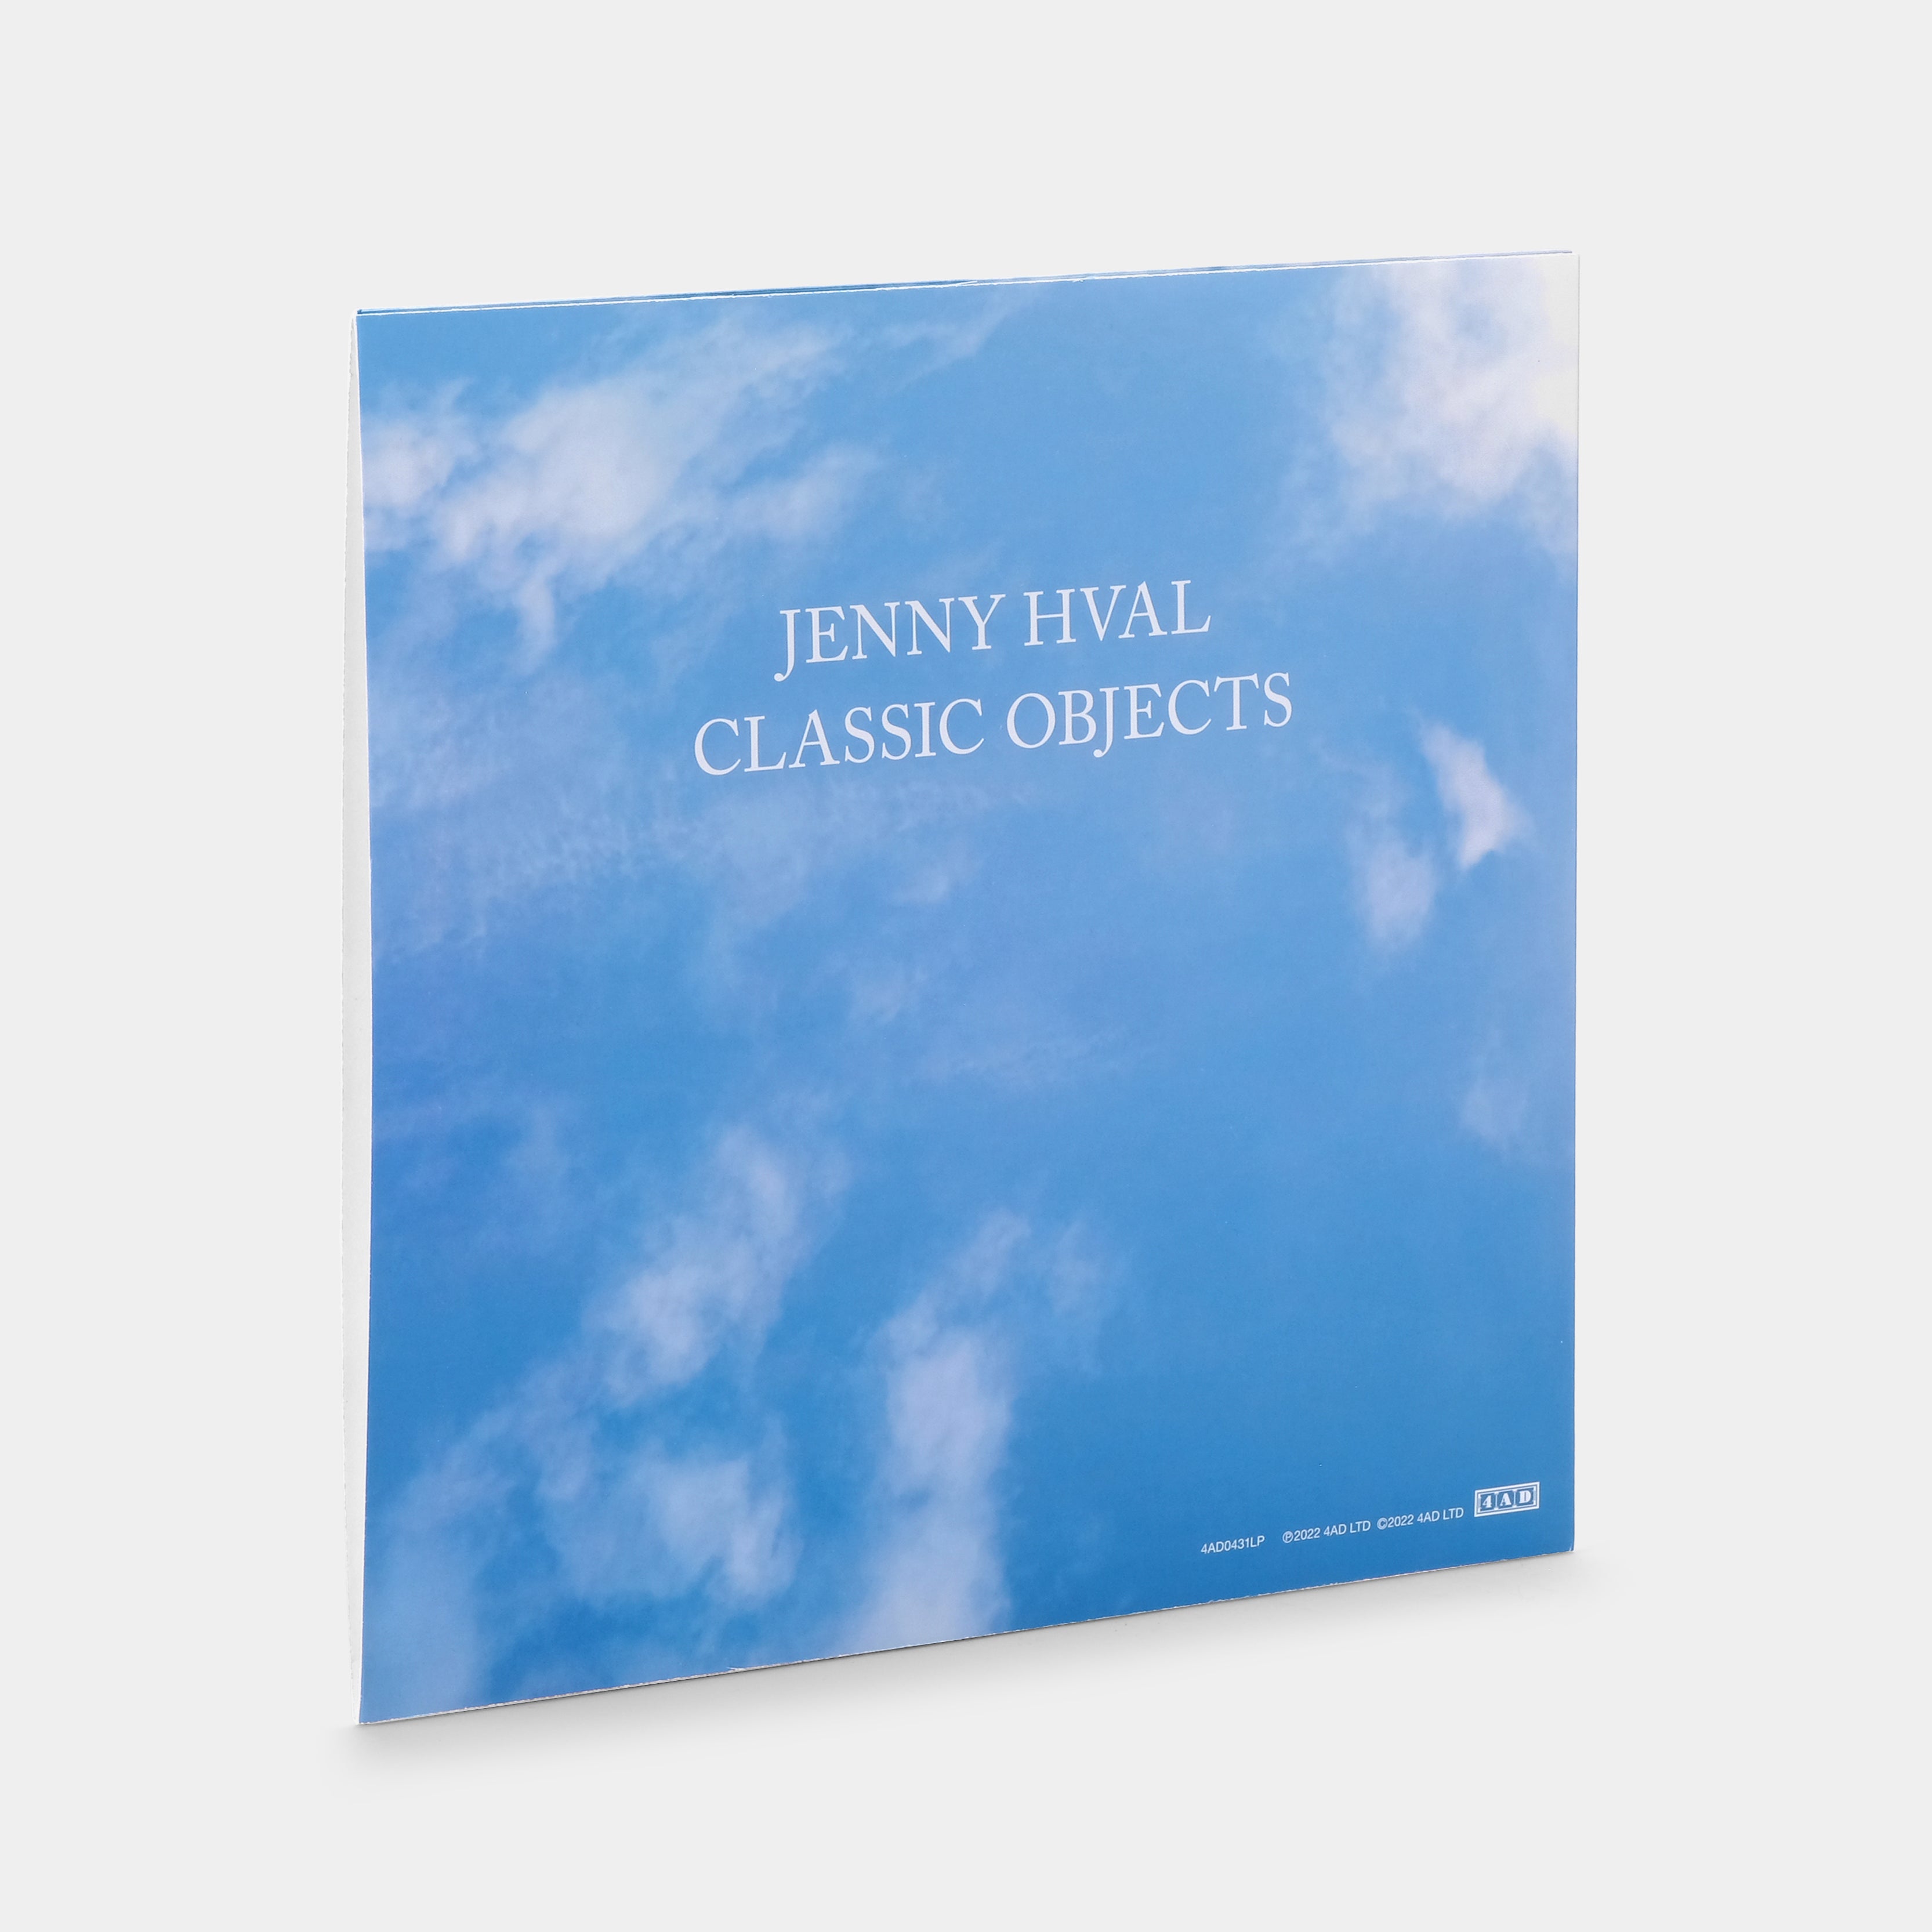 Jenny Hval - Classic Objects LP Blue Vinyl Record